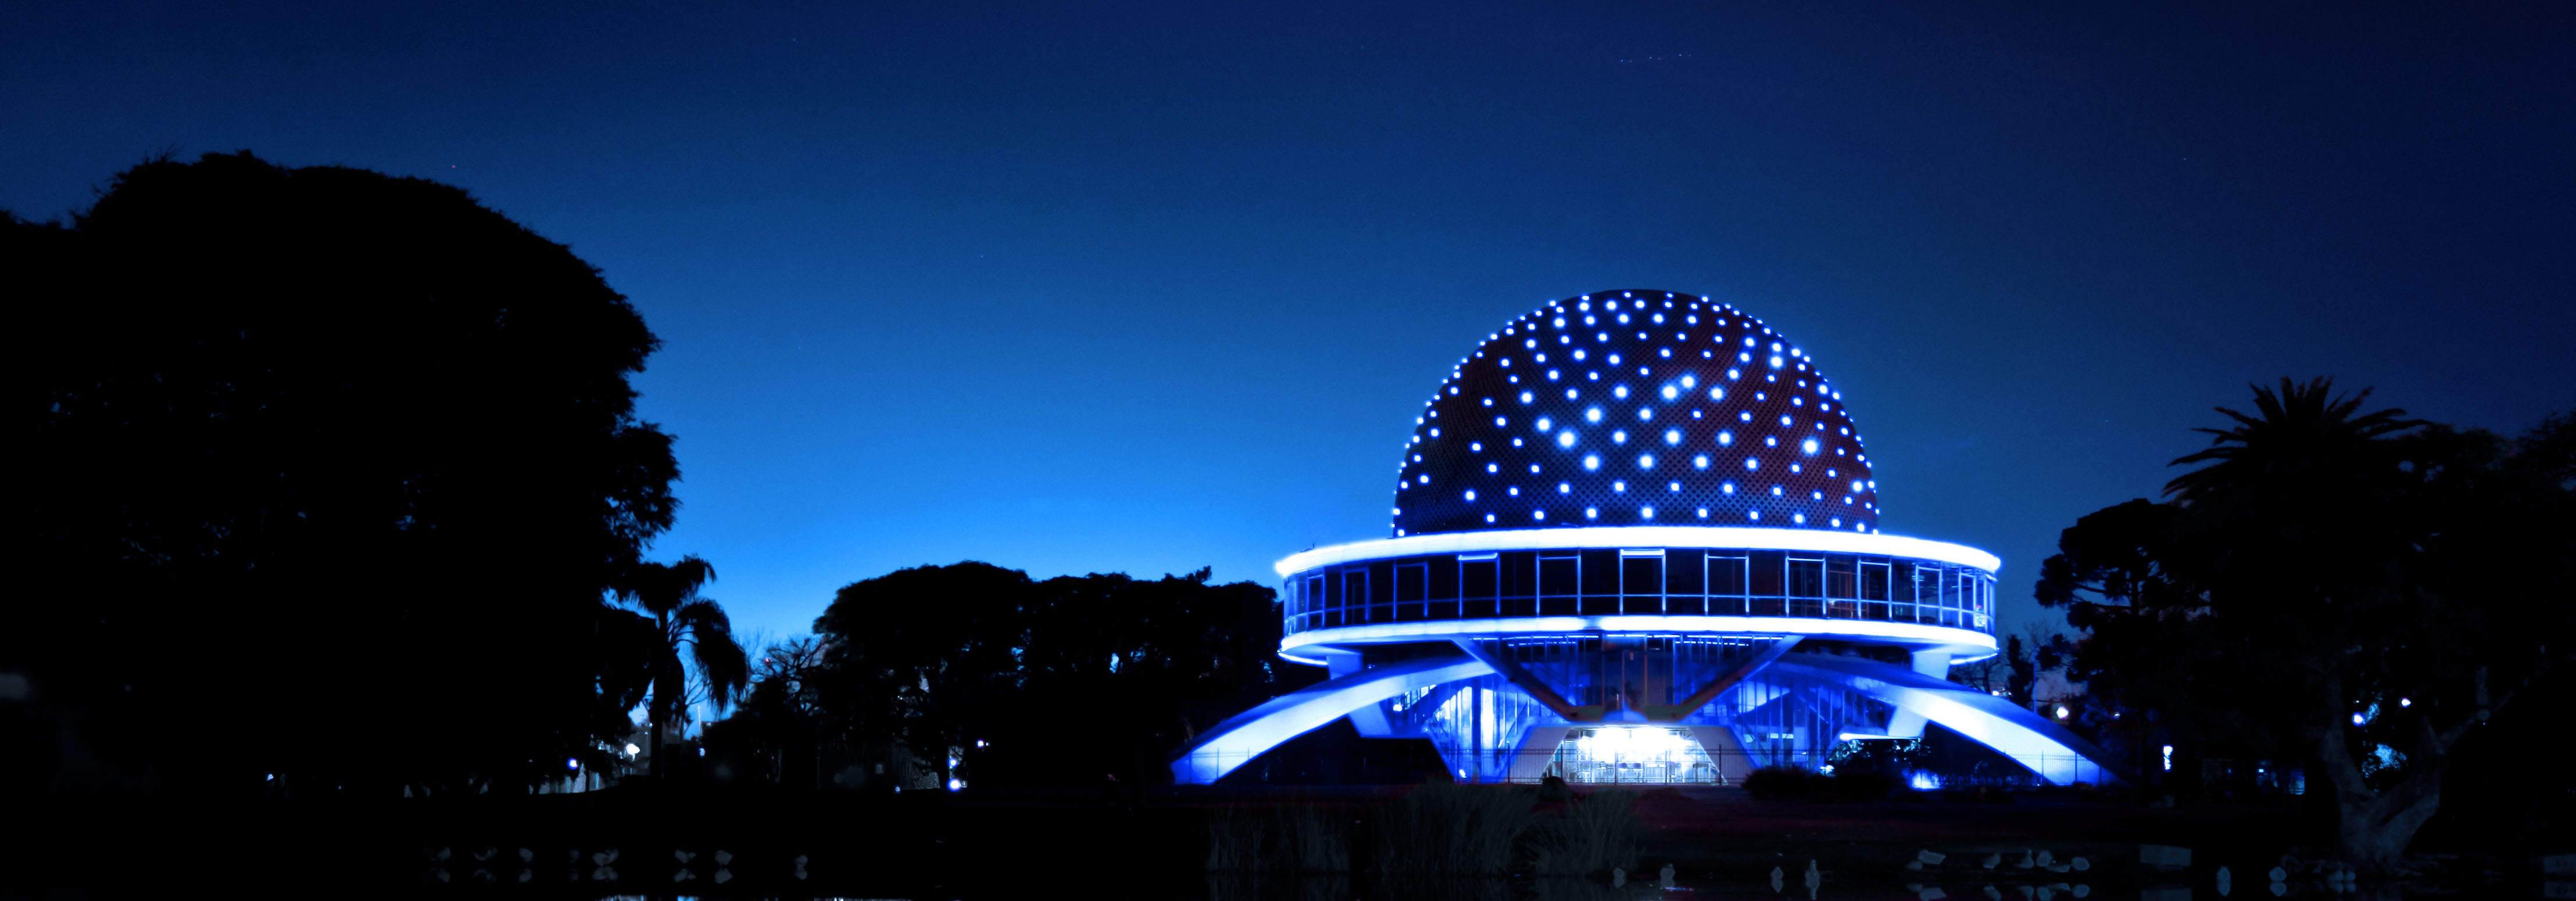 Planetario iluminado de color azul